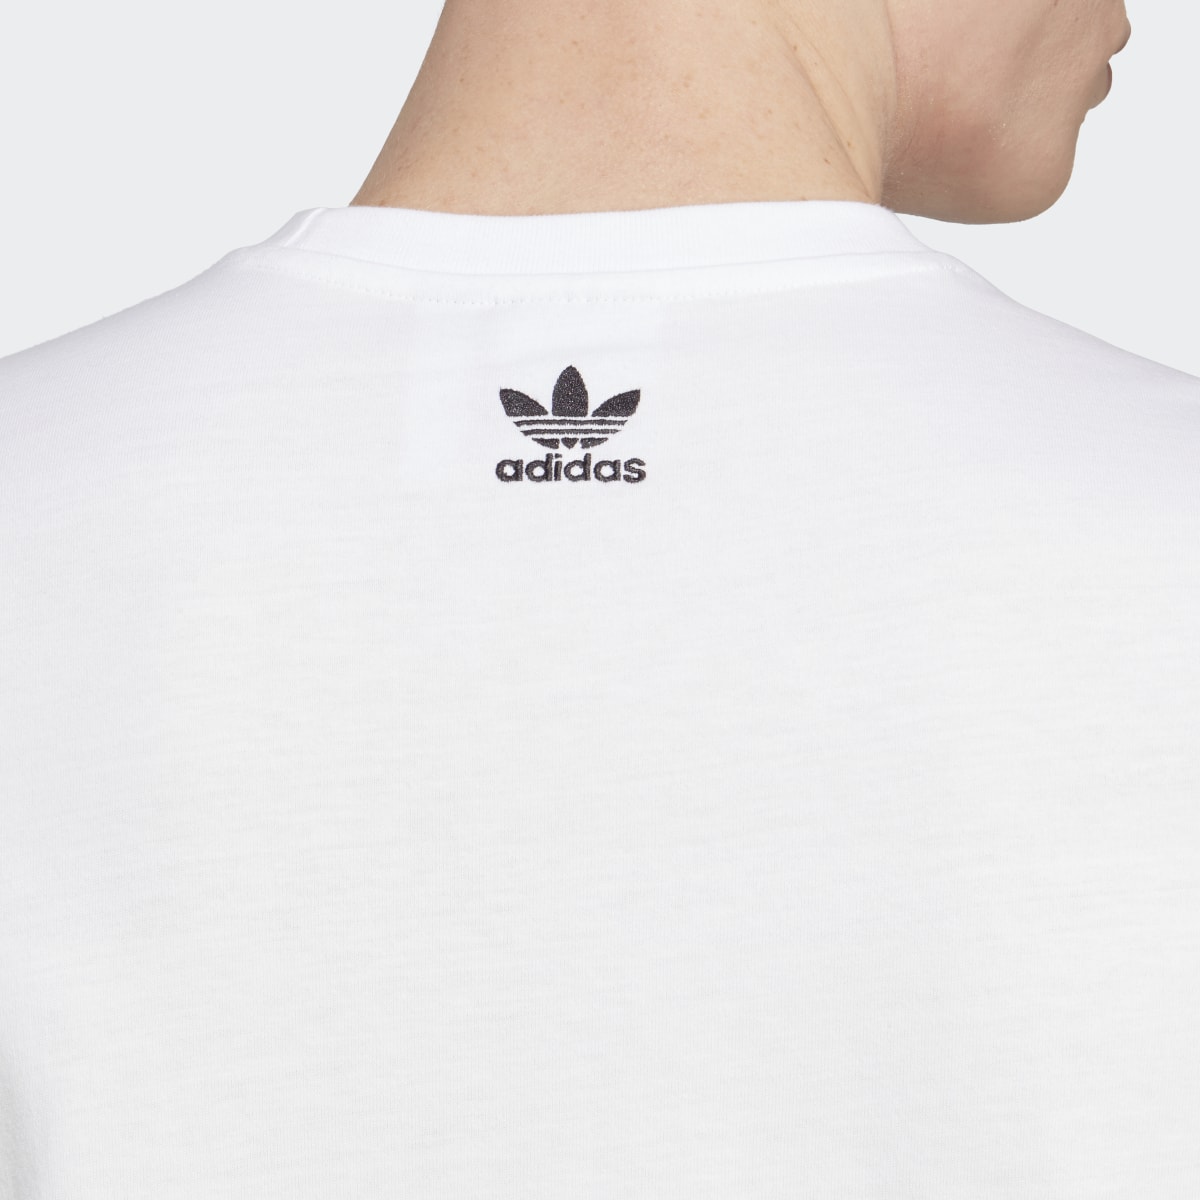 Adidas Camiseta Graphics New Age. 7